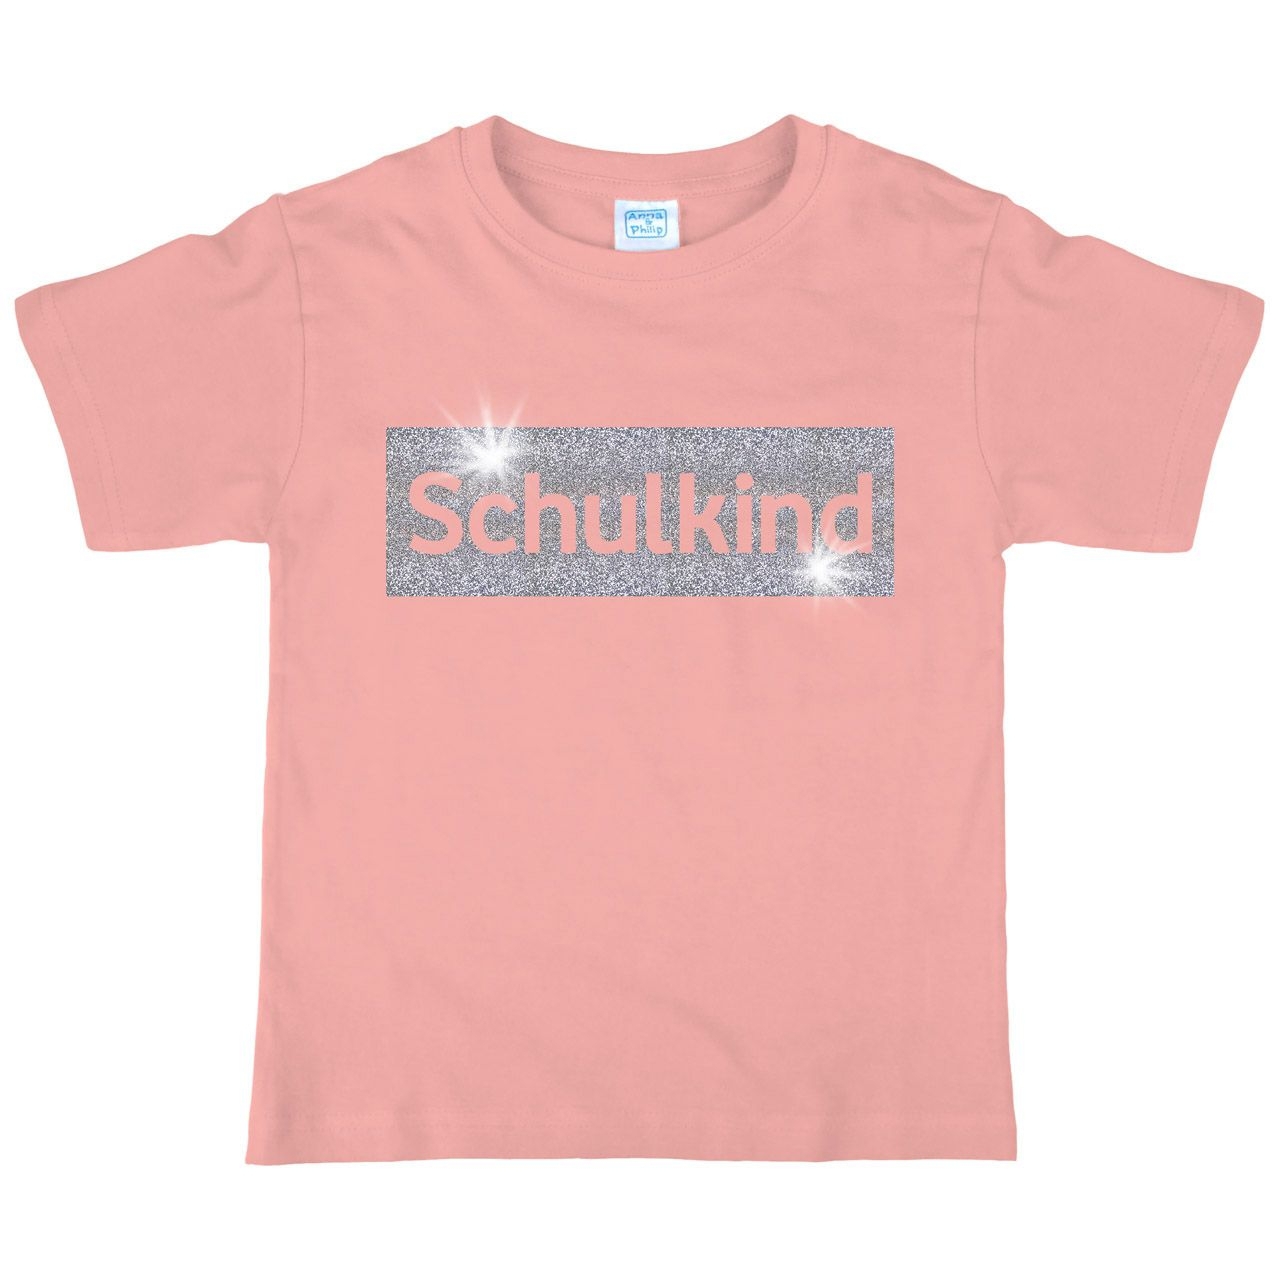 Schulkind Glitzer Kinder T-Shirt mit Namen rosa 122 / 128